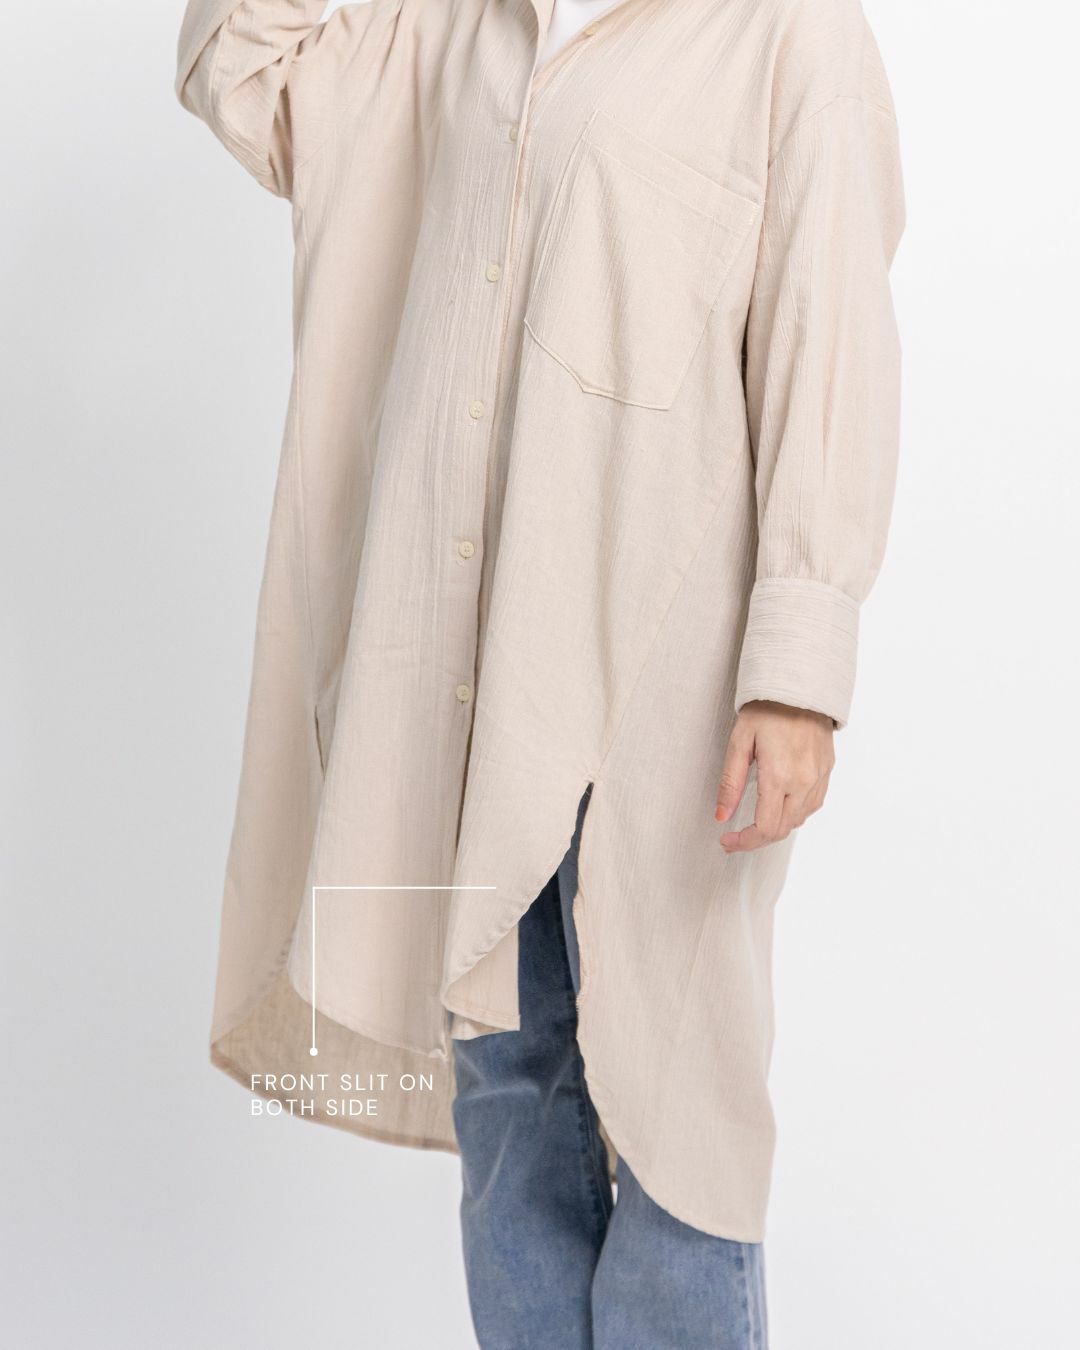 haura-wear-ayana-tunic-kaftan-midi-dress-blouse-shirt-long-sleeve-baju-muslimah-baju-perempuan-shirt-blouse-baju (6)